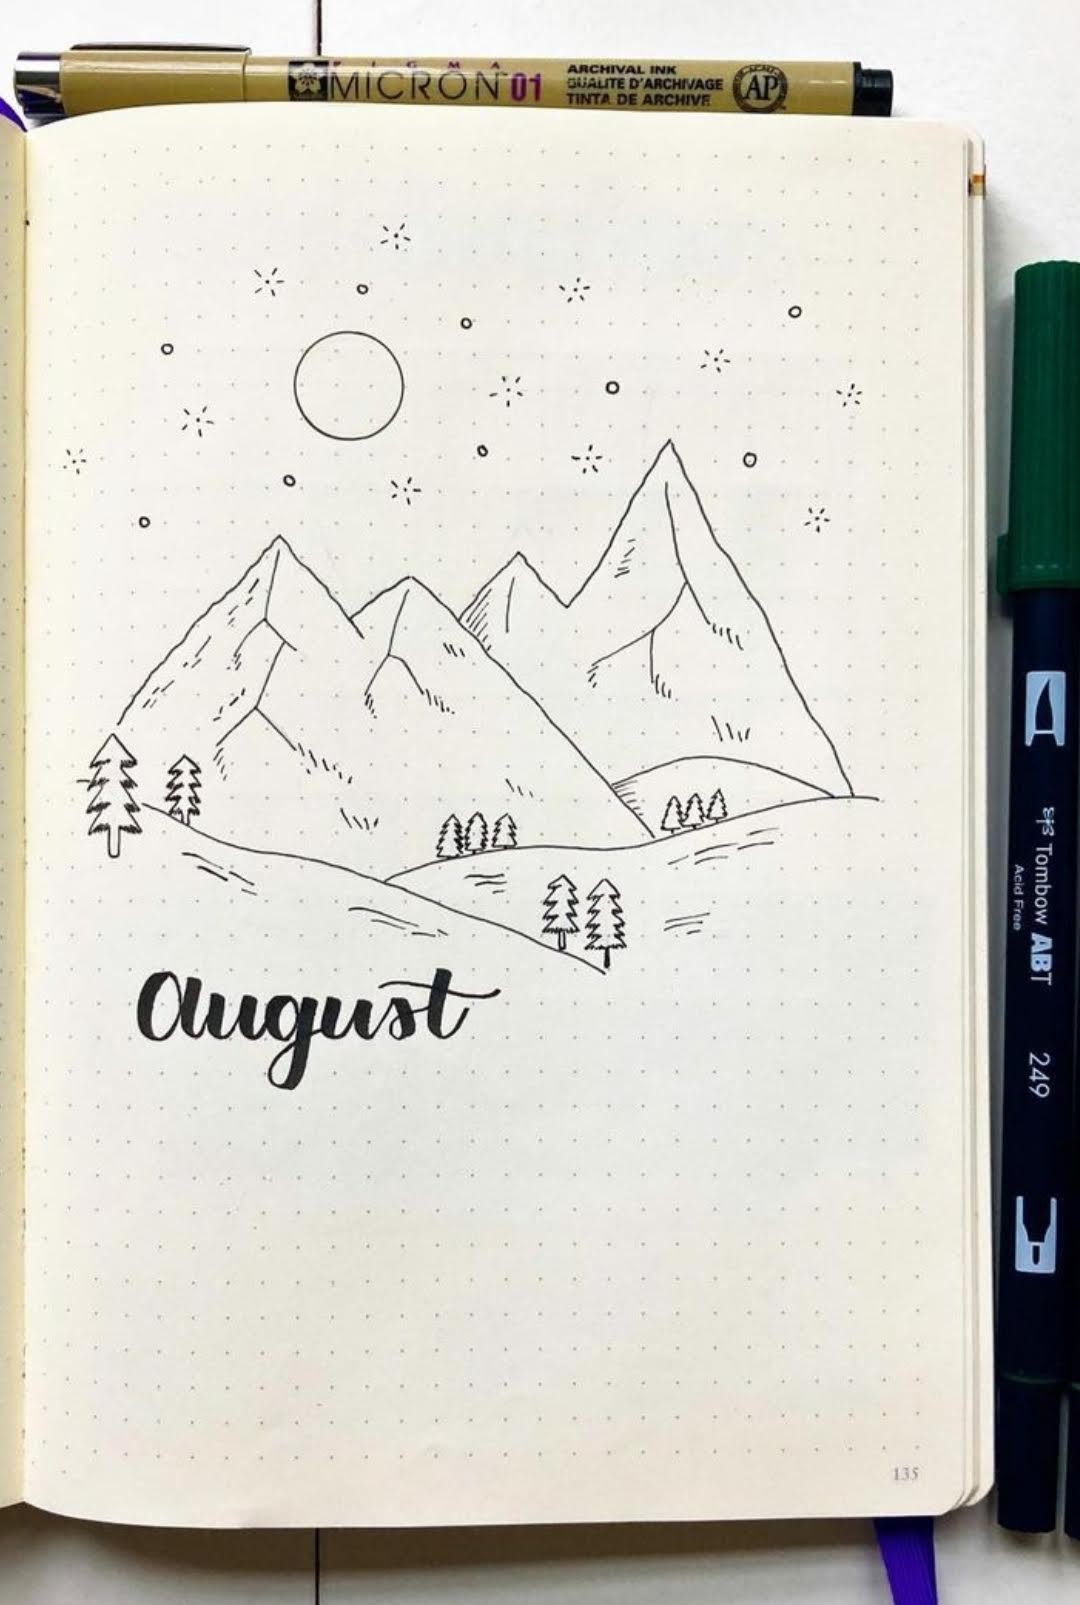 august bullet journal cover minimalist